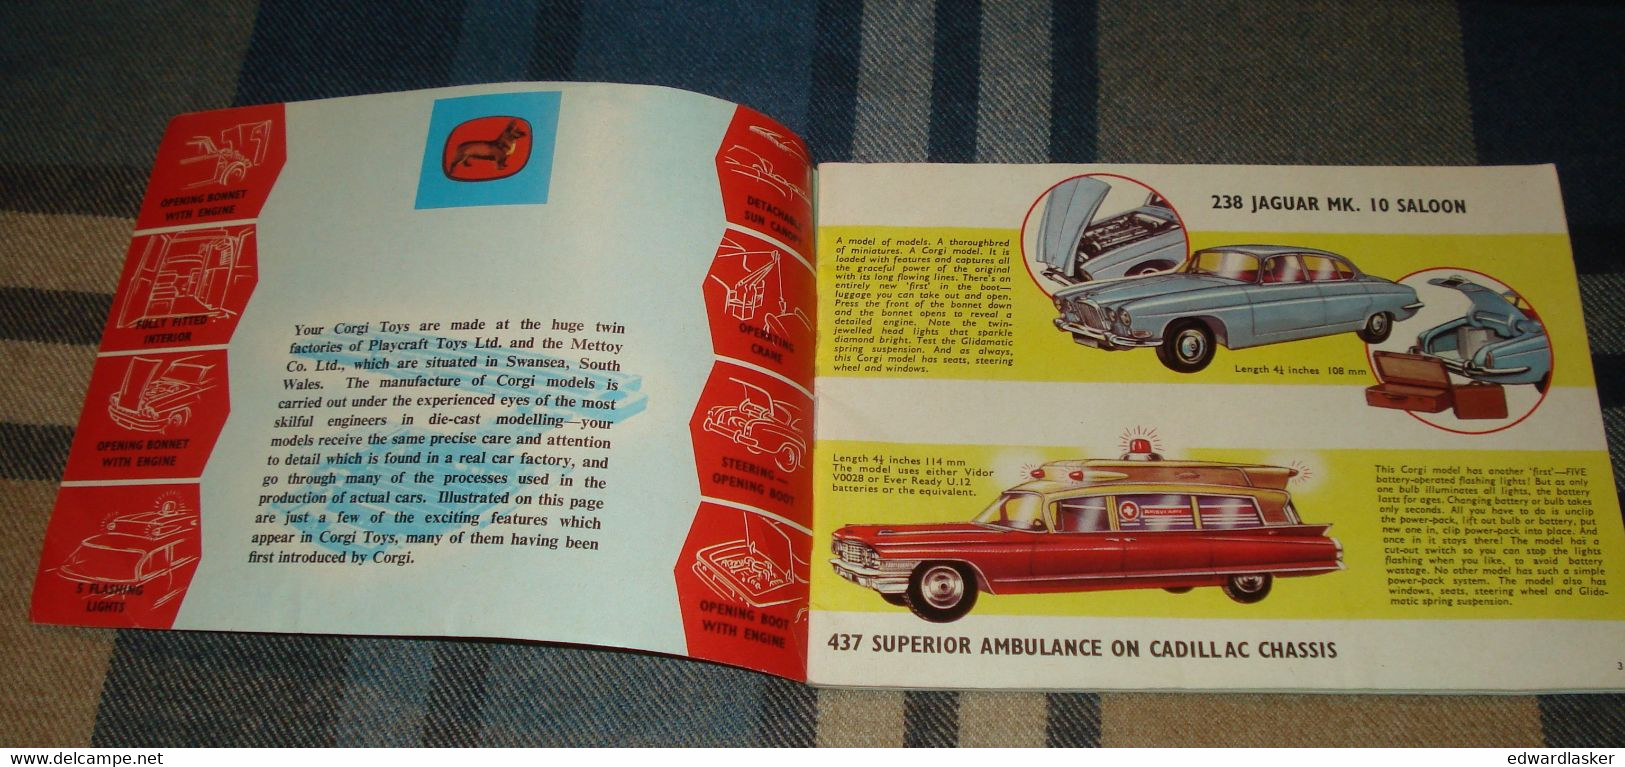 Catalogue CORGI TOYS 1963/64 - Voitures Miniatures - Incomplet - Catalogues